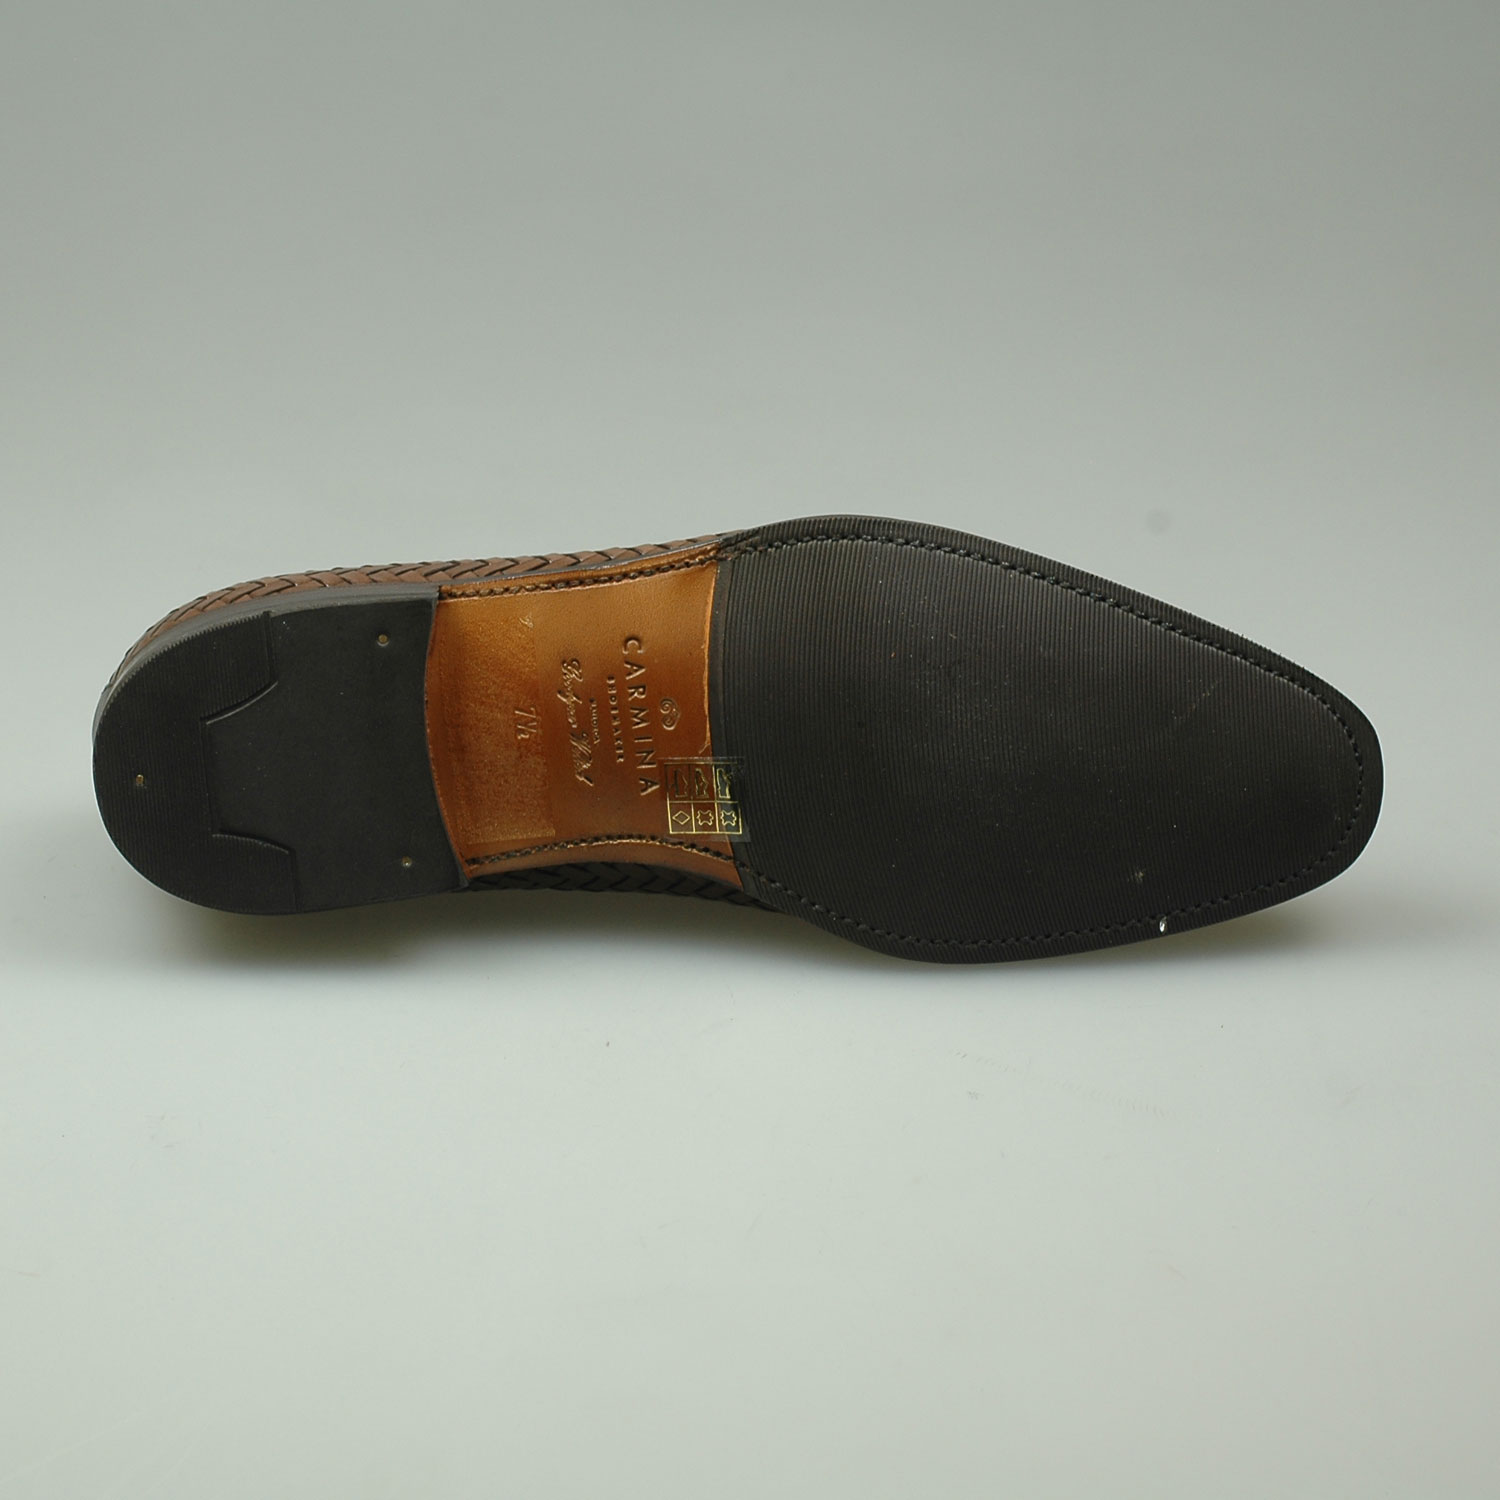 Shop Carmina Cristo wholecut loafer online at Shoes & Shirts